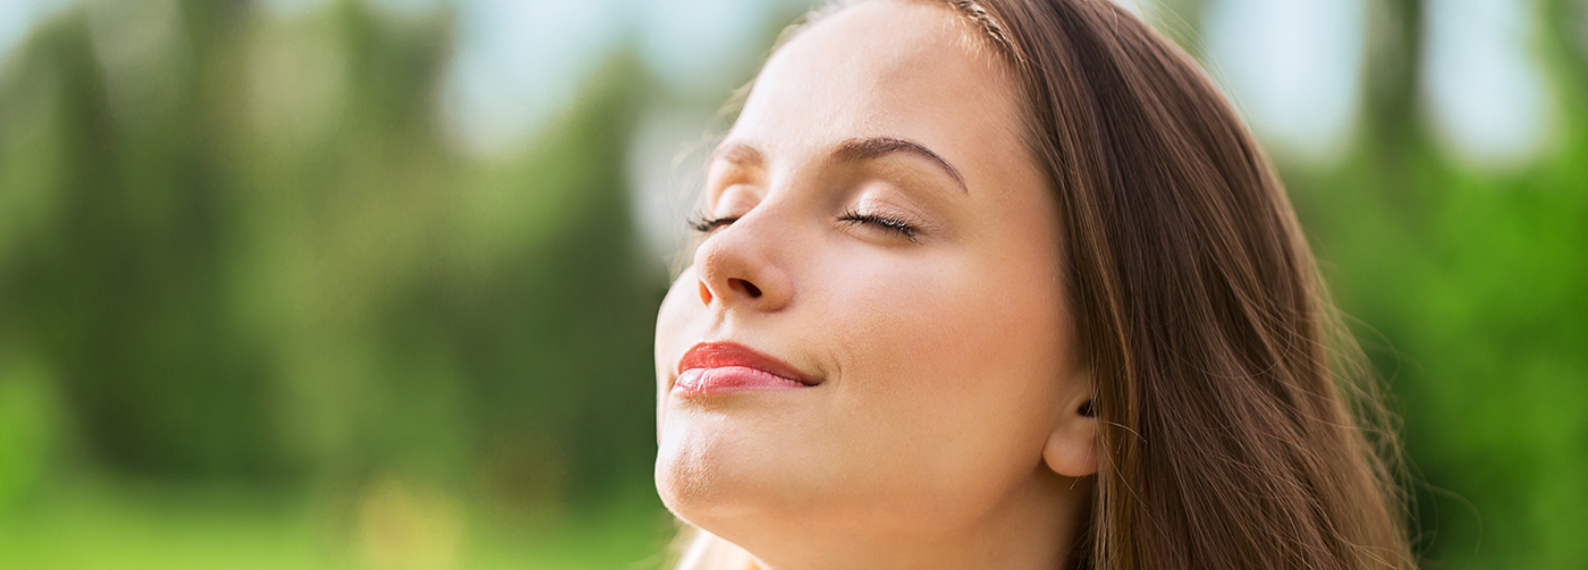 Técnicas de respiración para reducir el estrés ¡Relájate en 5 minutos!